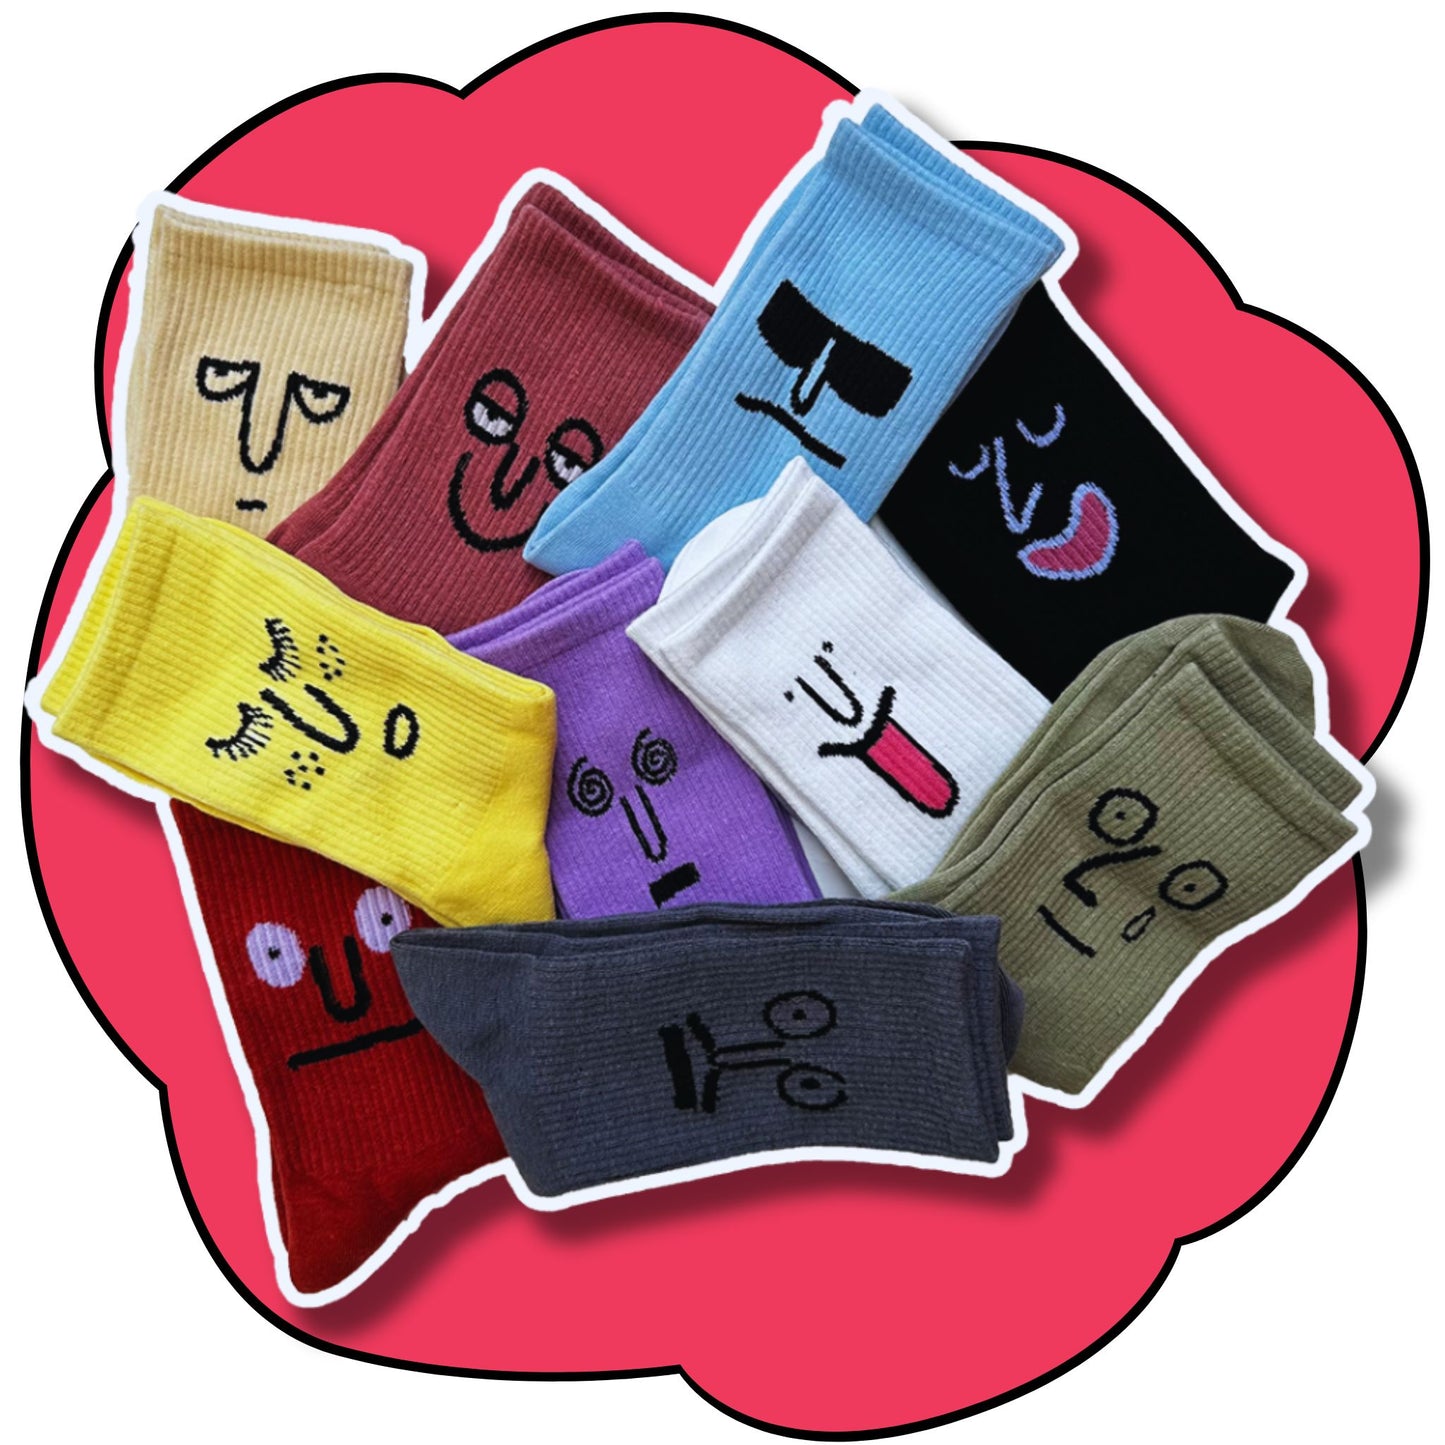 Smiley Sox | High-Quality, Happy Socks from Australia – SmileySox